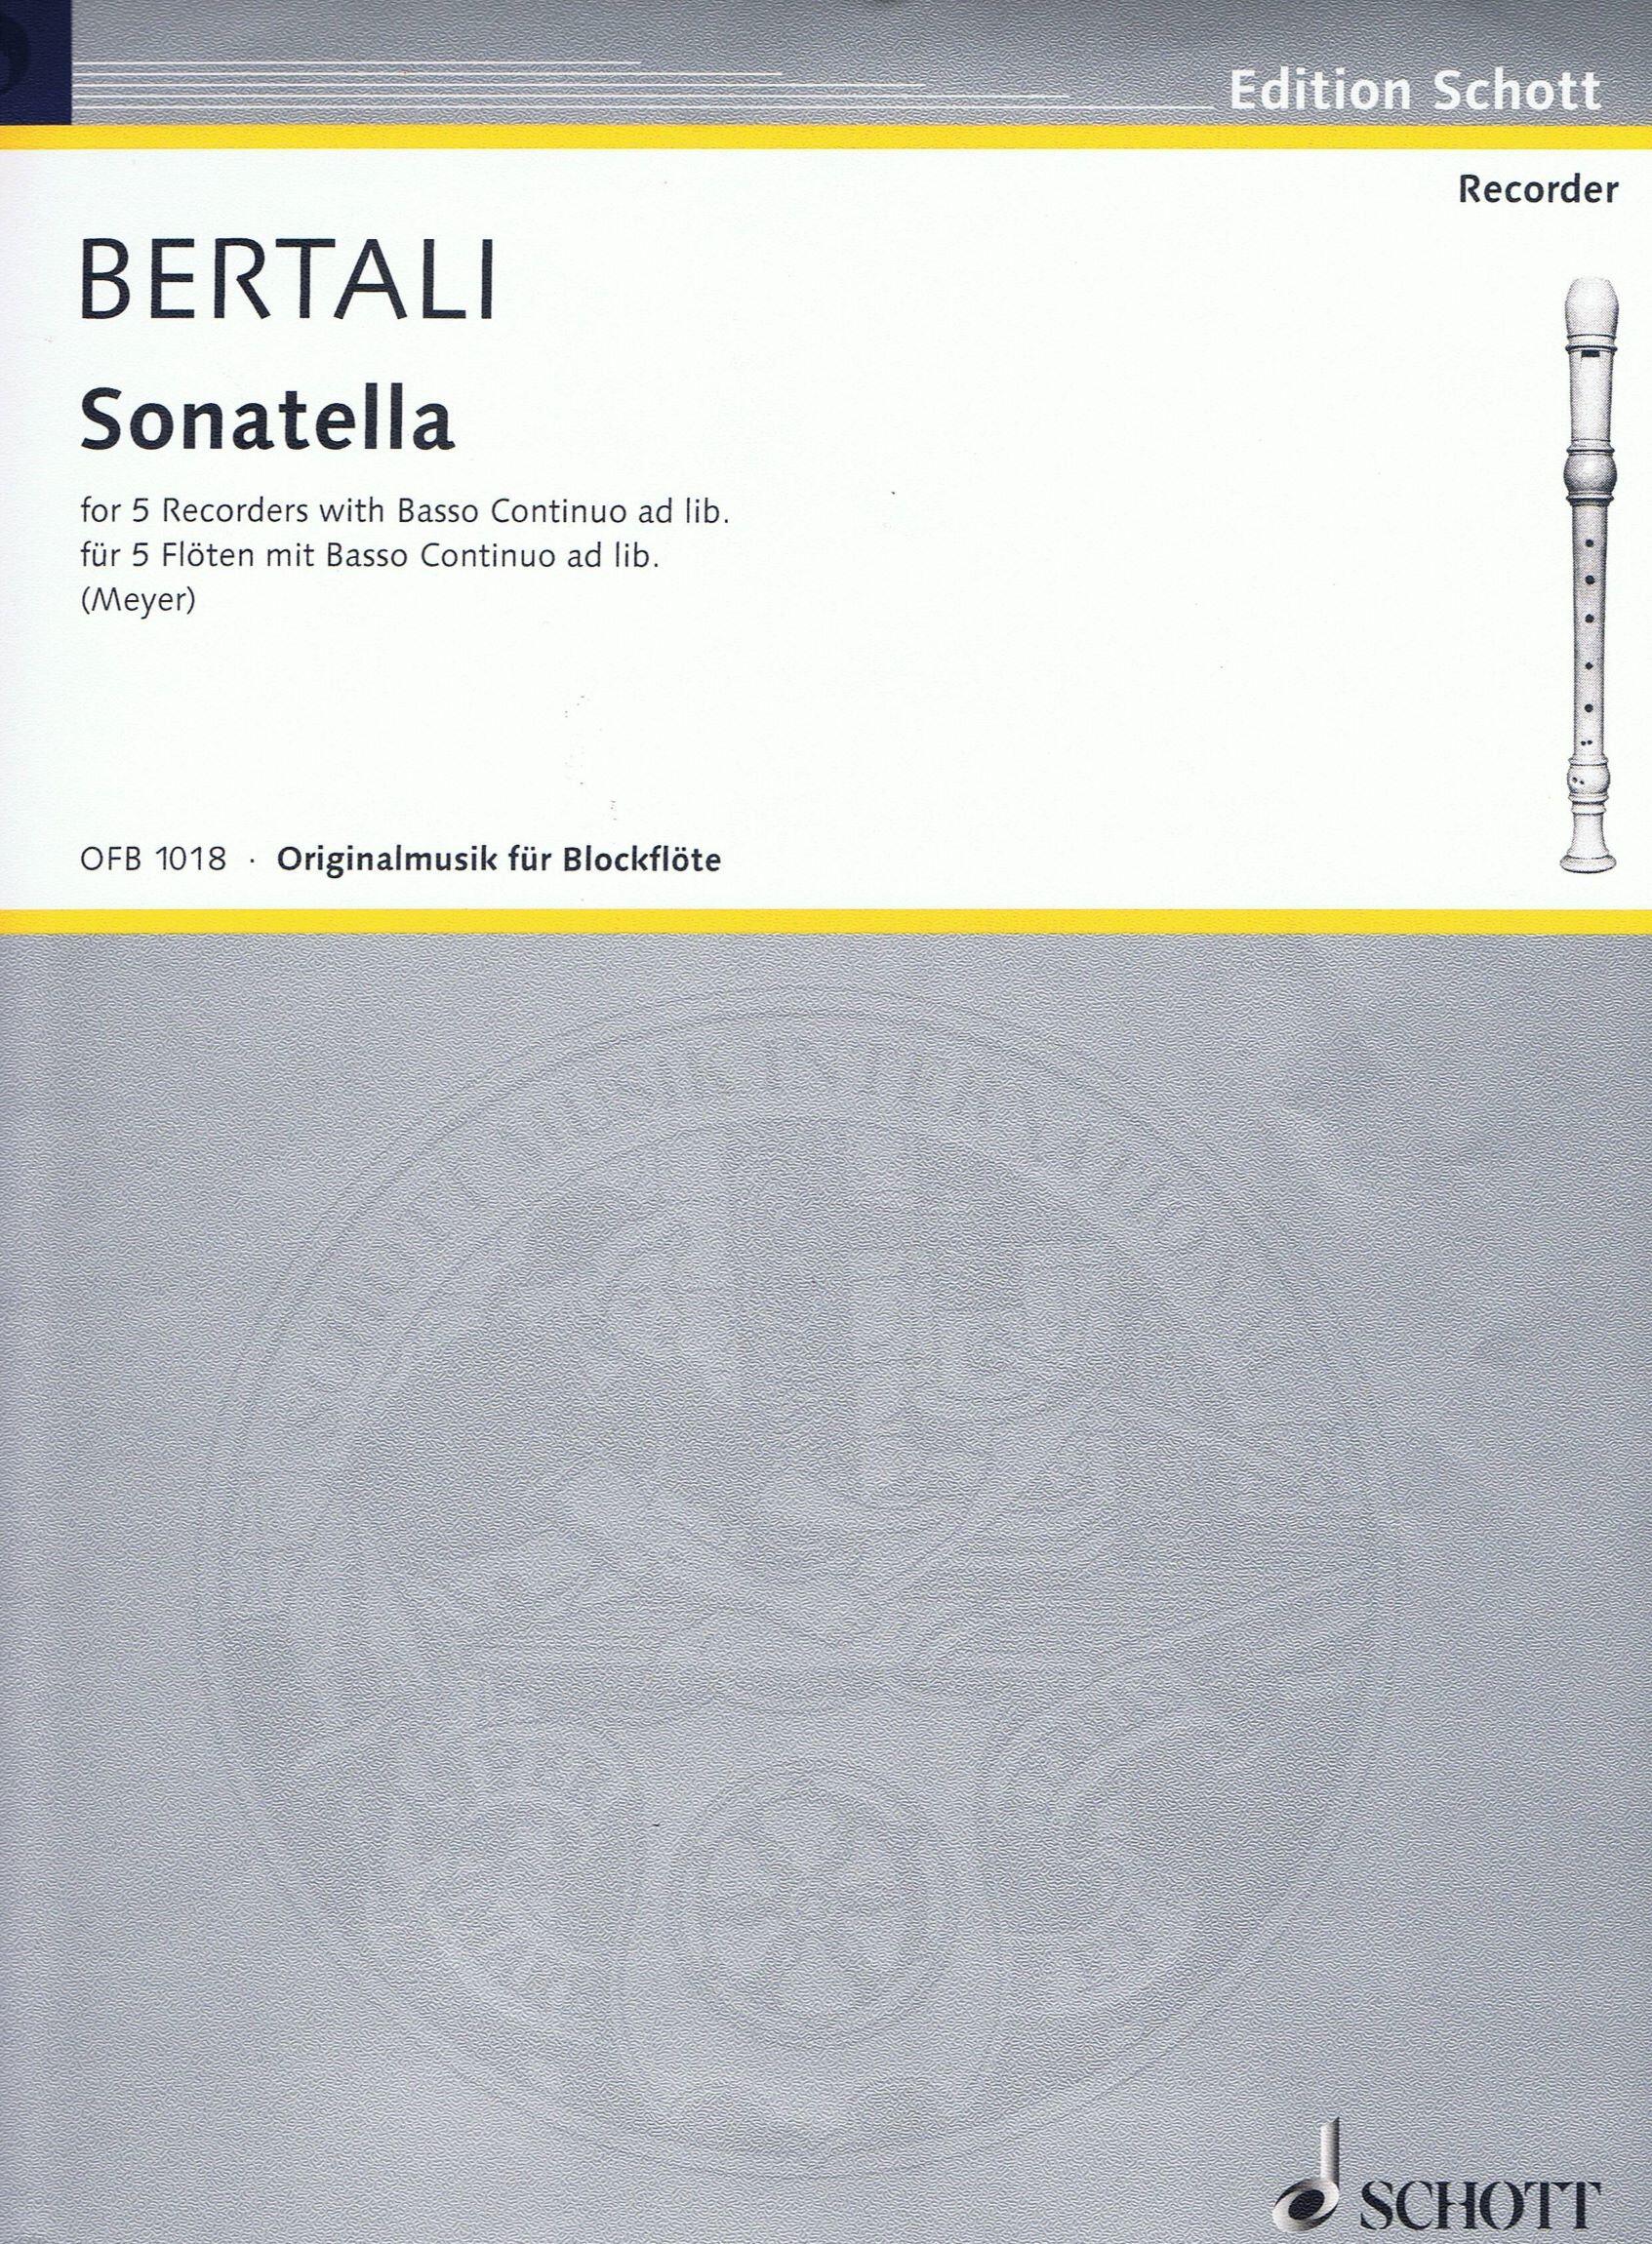 Schott Music Sonatella  Antonio Bertali : photo 1